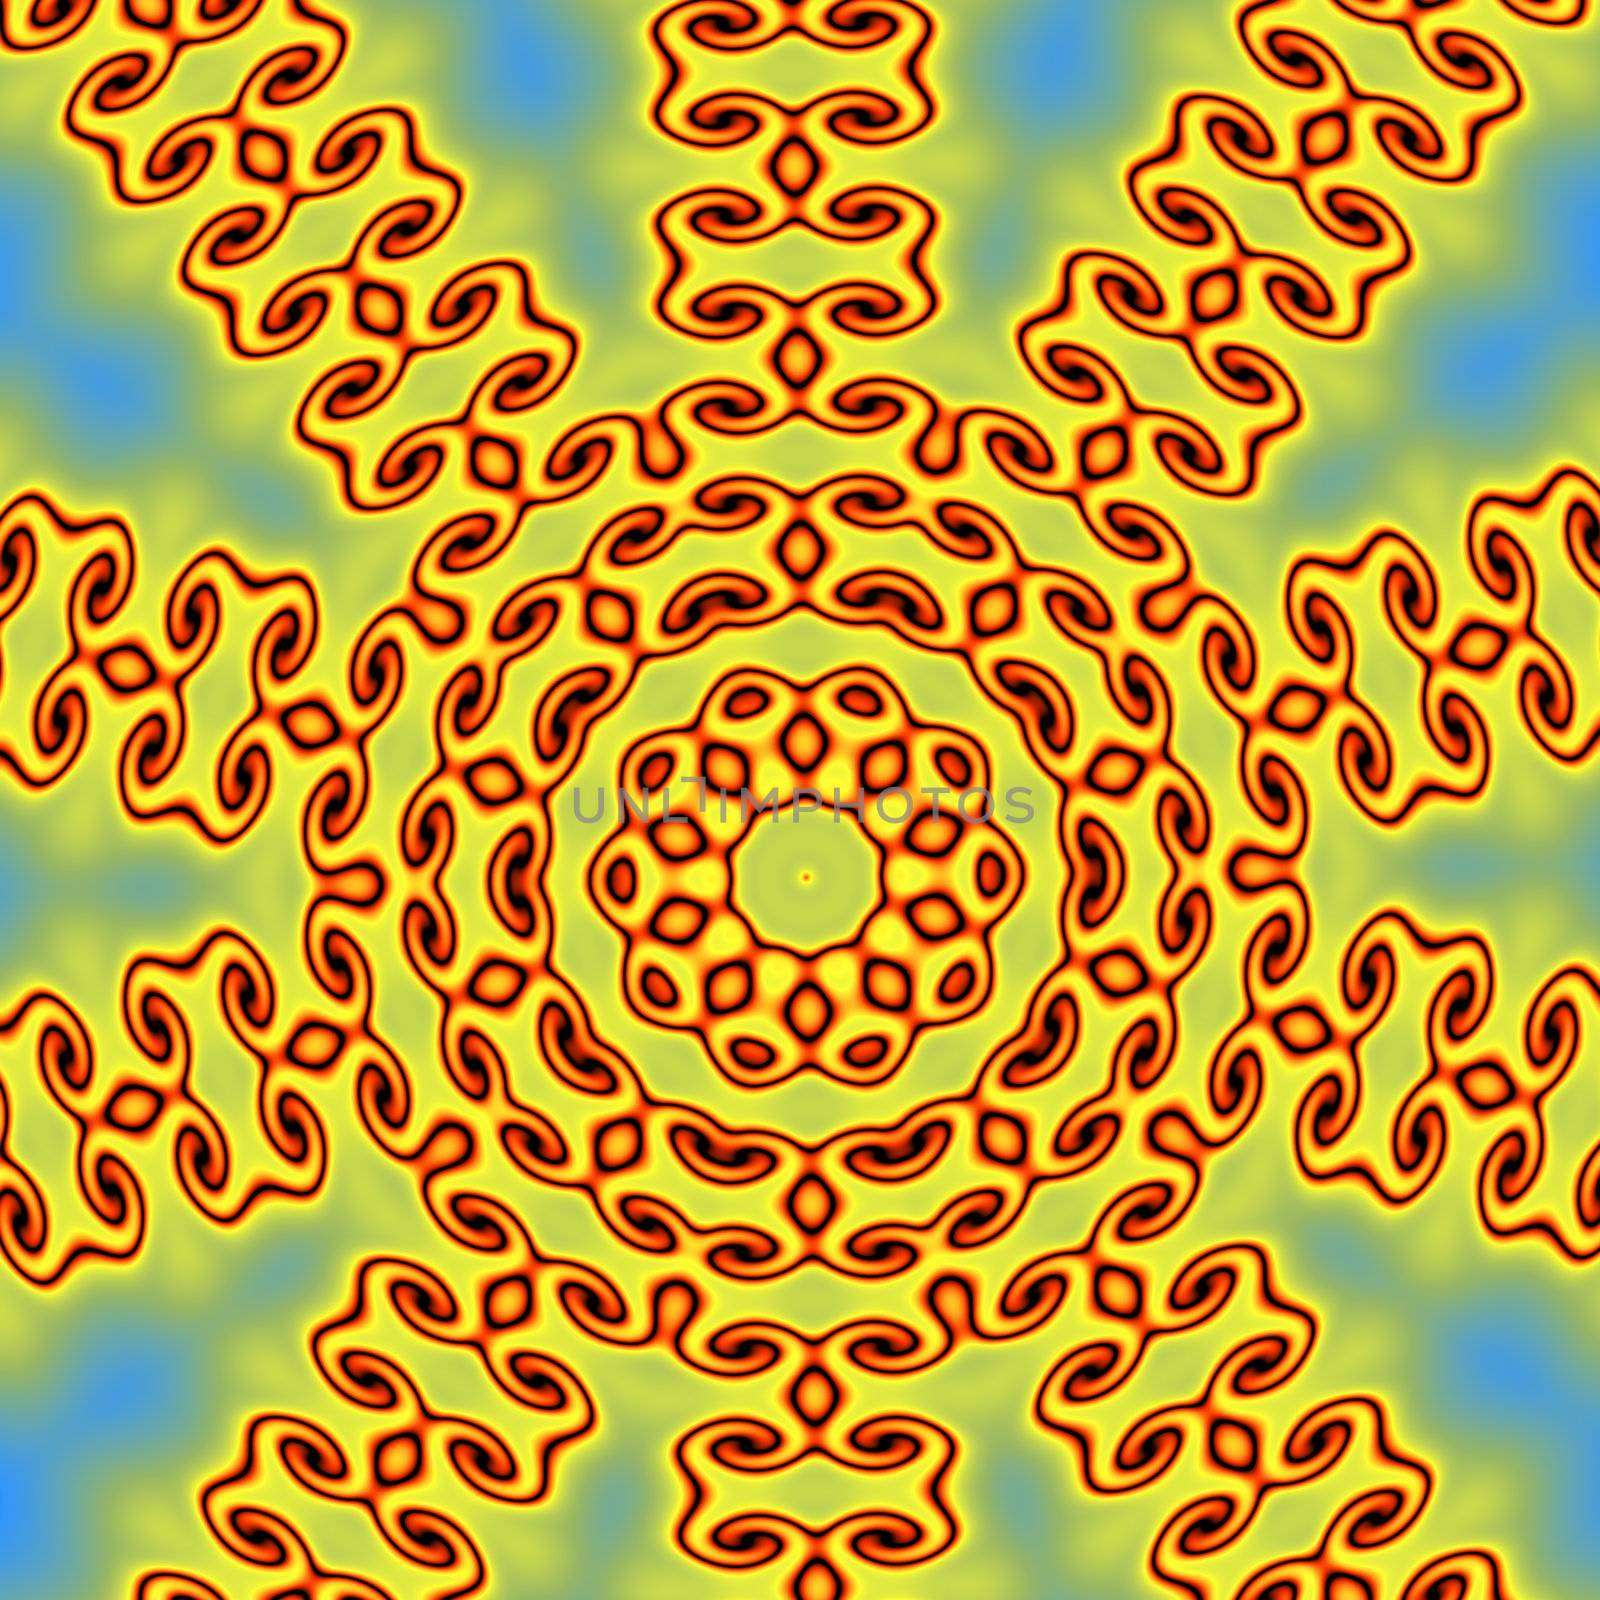 Circular Abstract Pattern by patballard